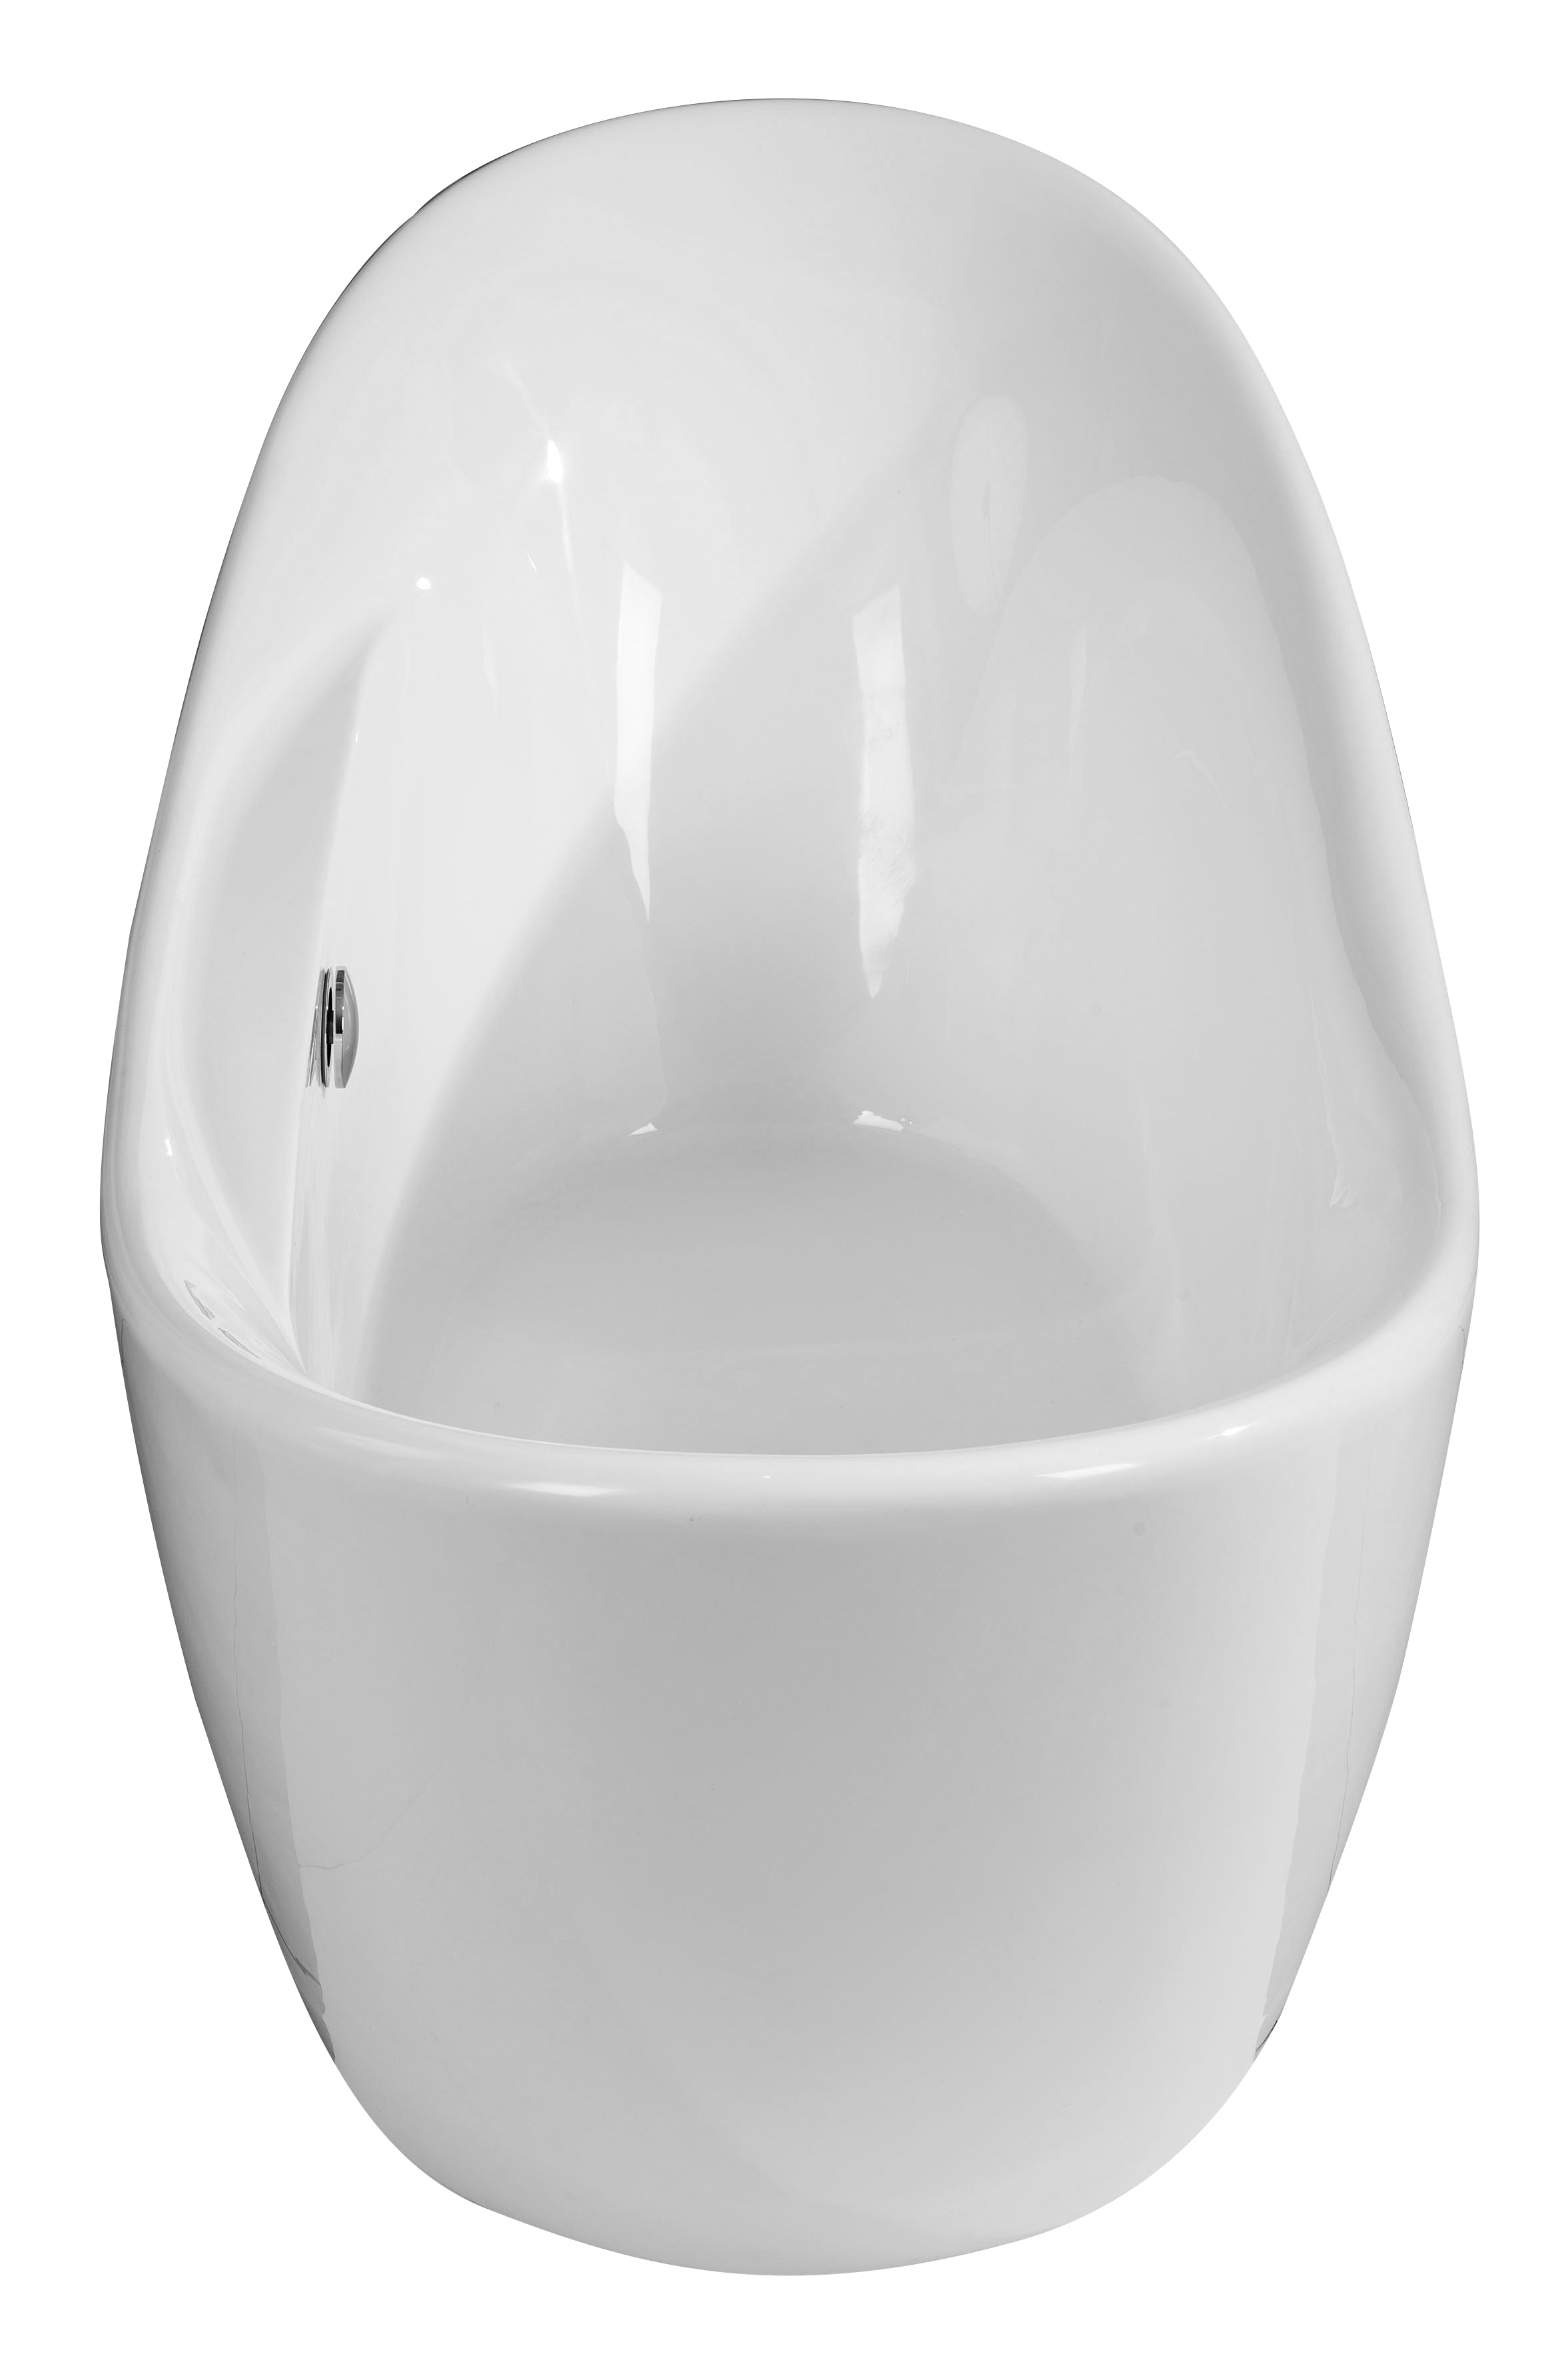 ALFI AB8803 Bathtub White Oval Acrylic Free Standing Soaker (68-inch)